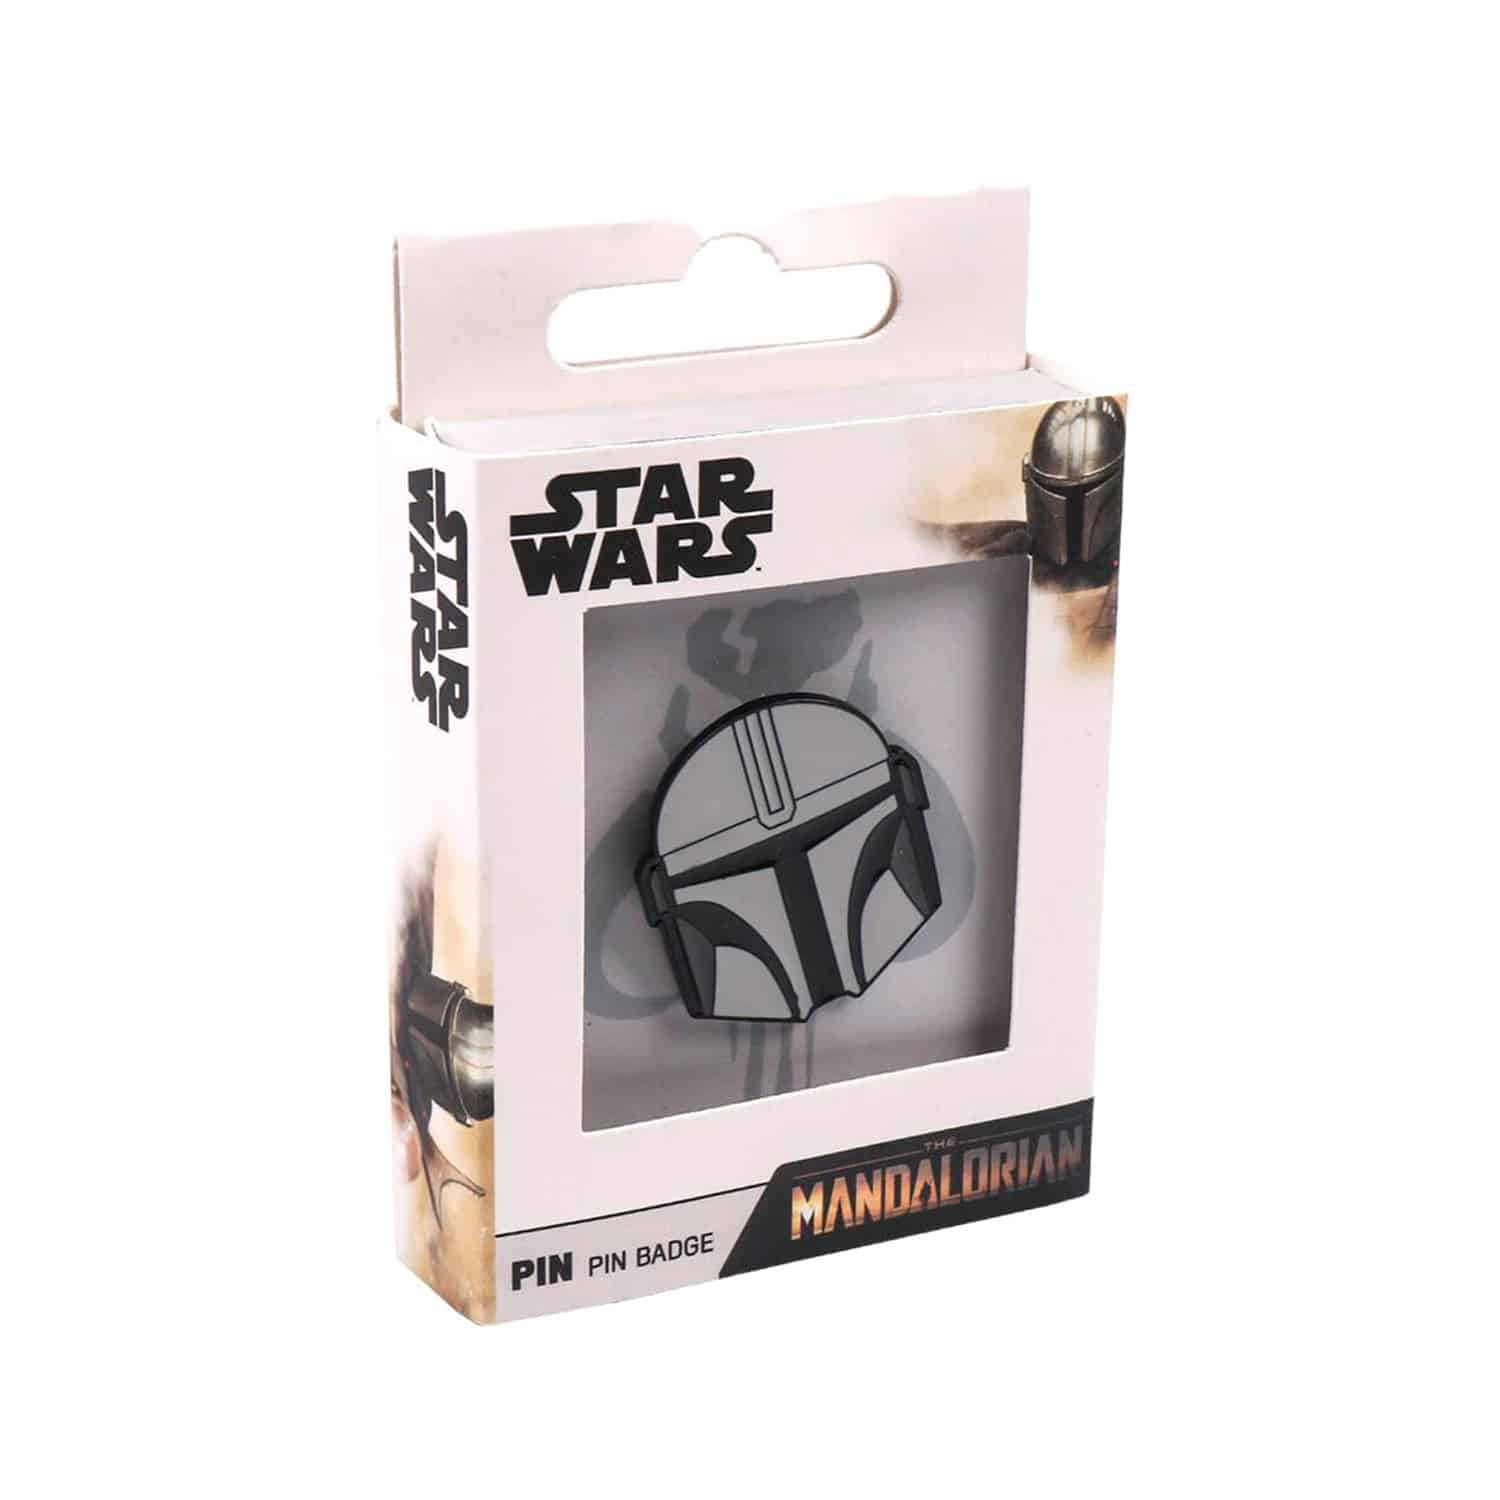 Star Wars: The Mandalorian - Pin Badge